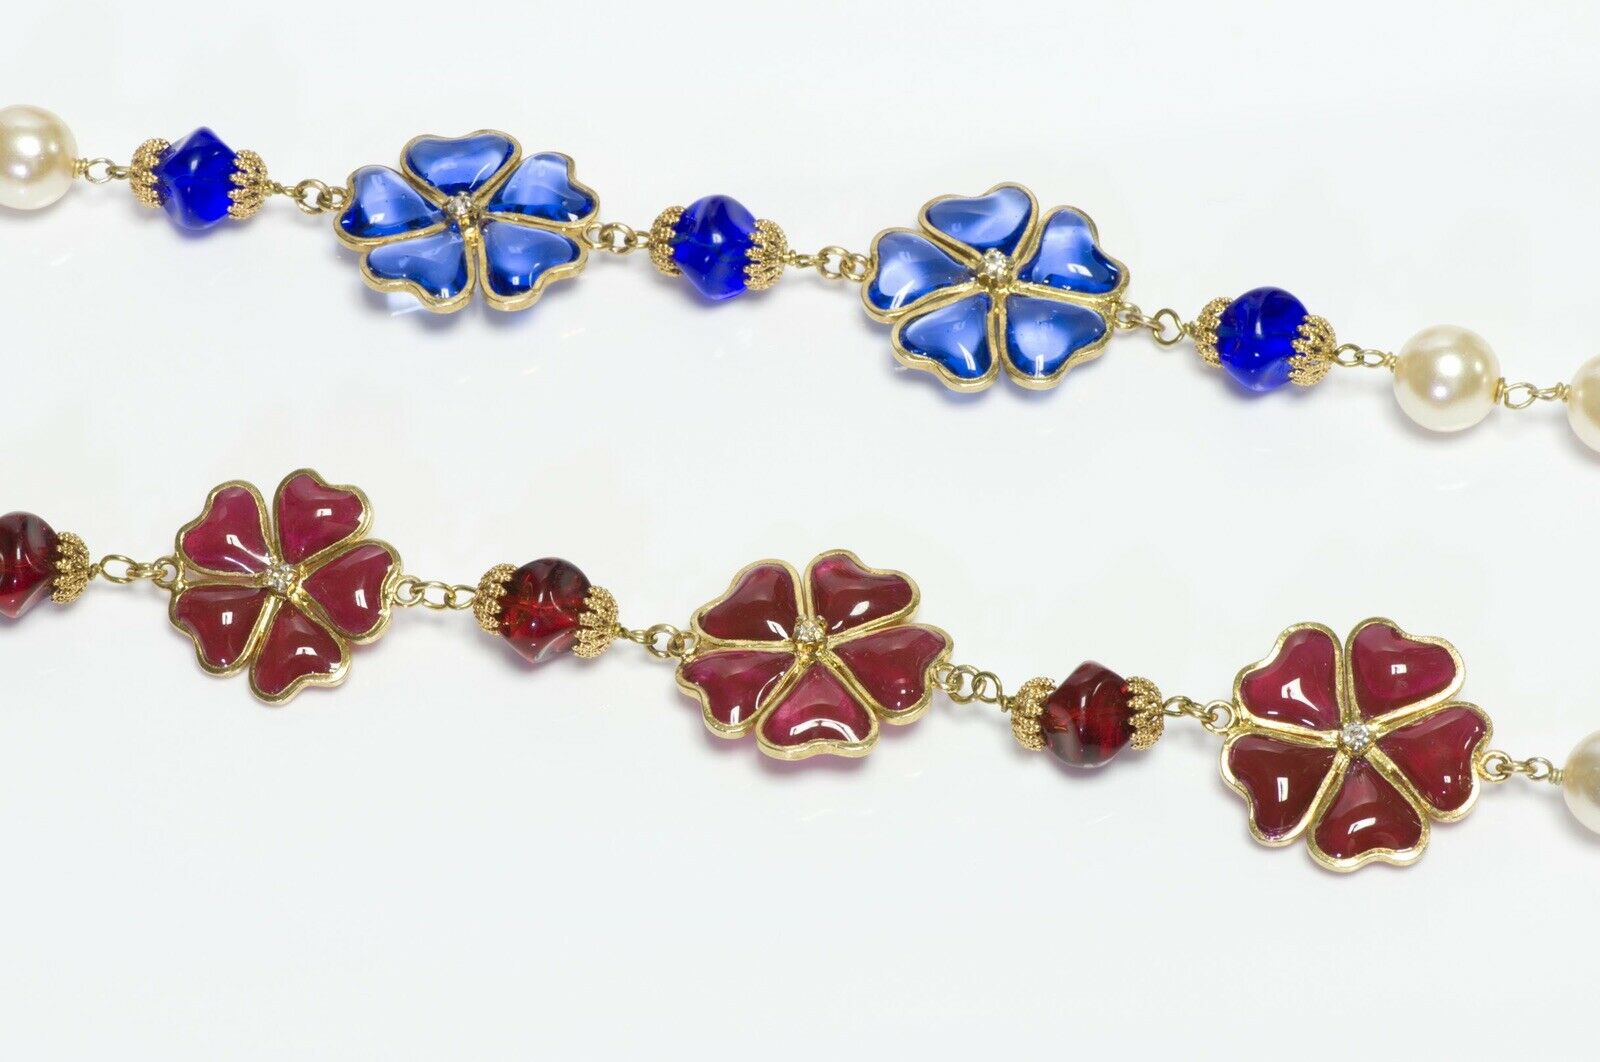 CHANEL Paris 1990’s Gripoix Red Green Blue Camellia Glass Pearl Sautoir Necklace